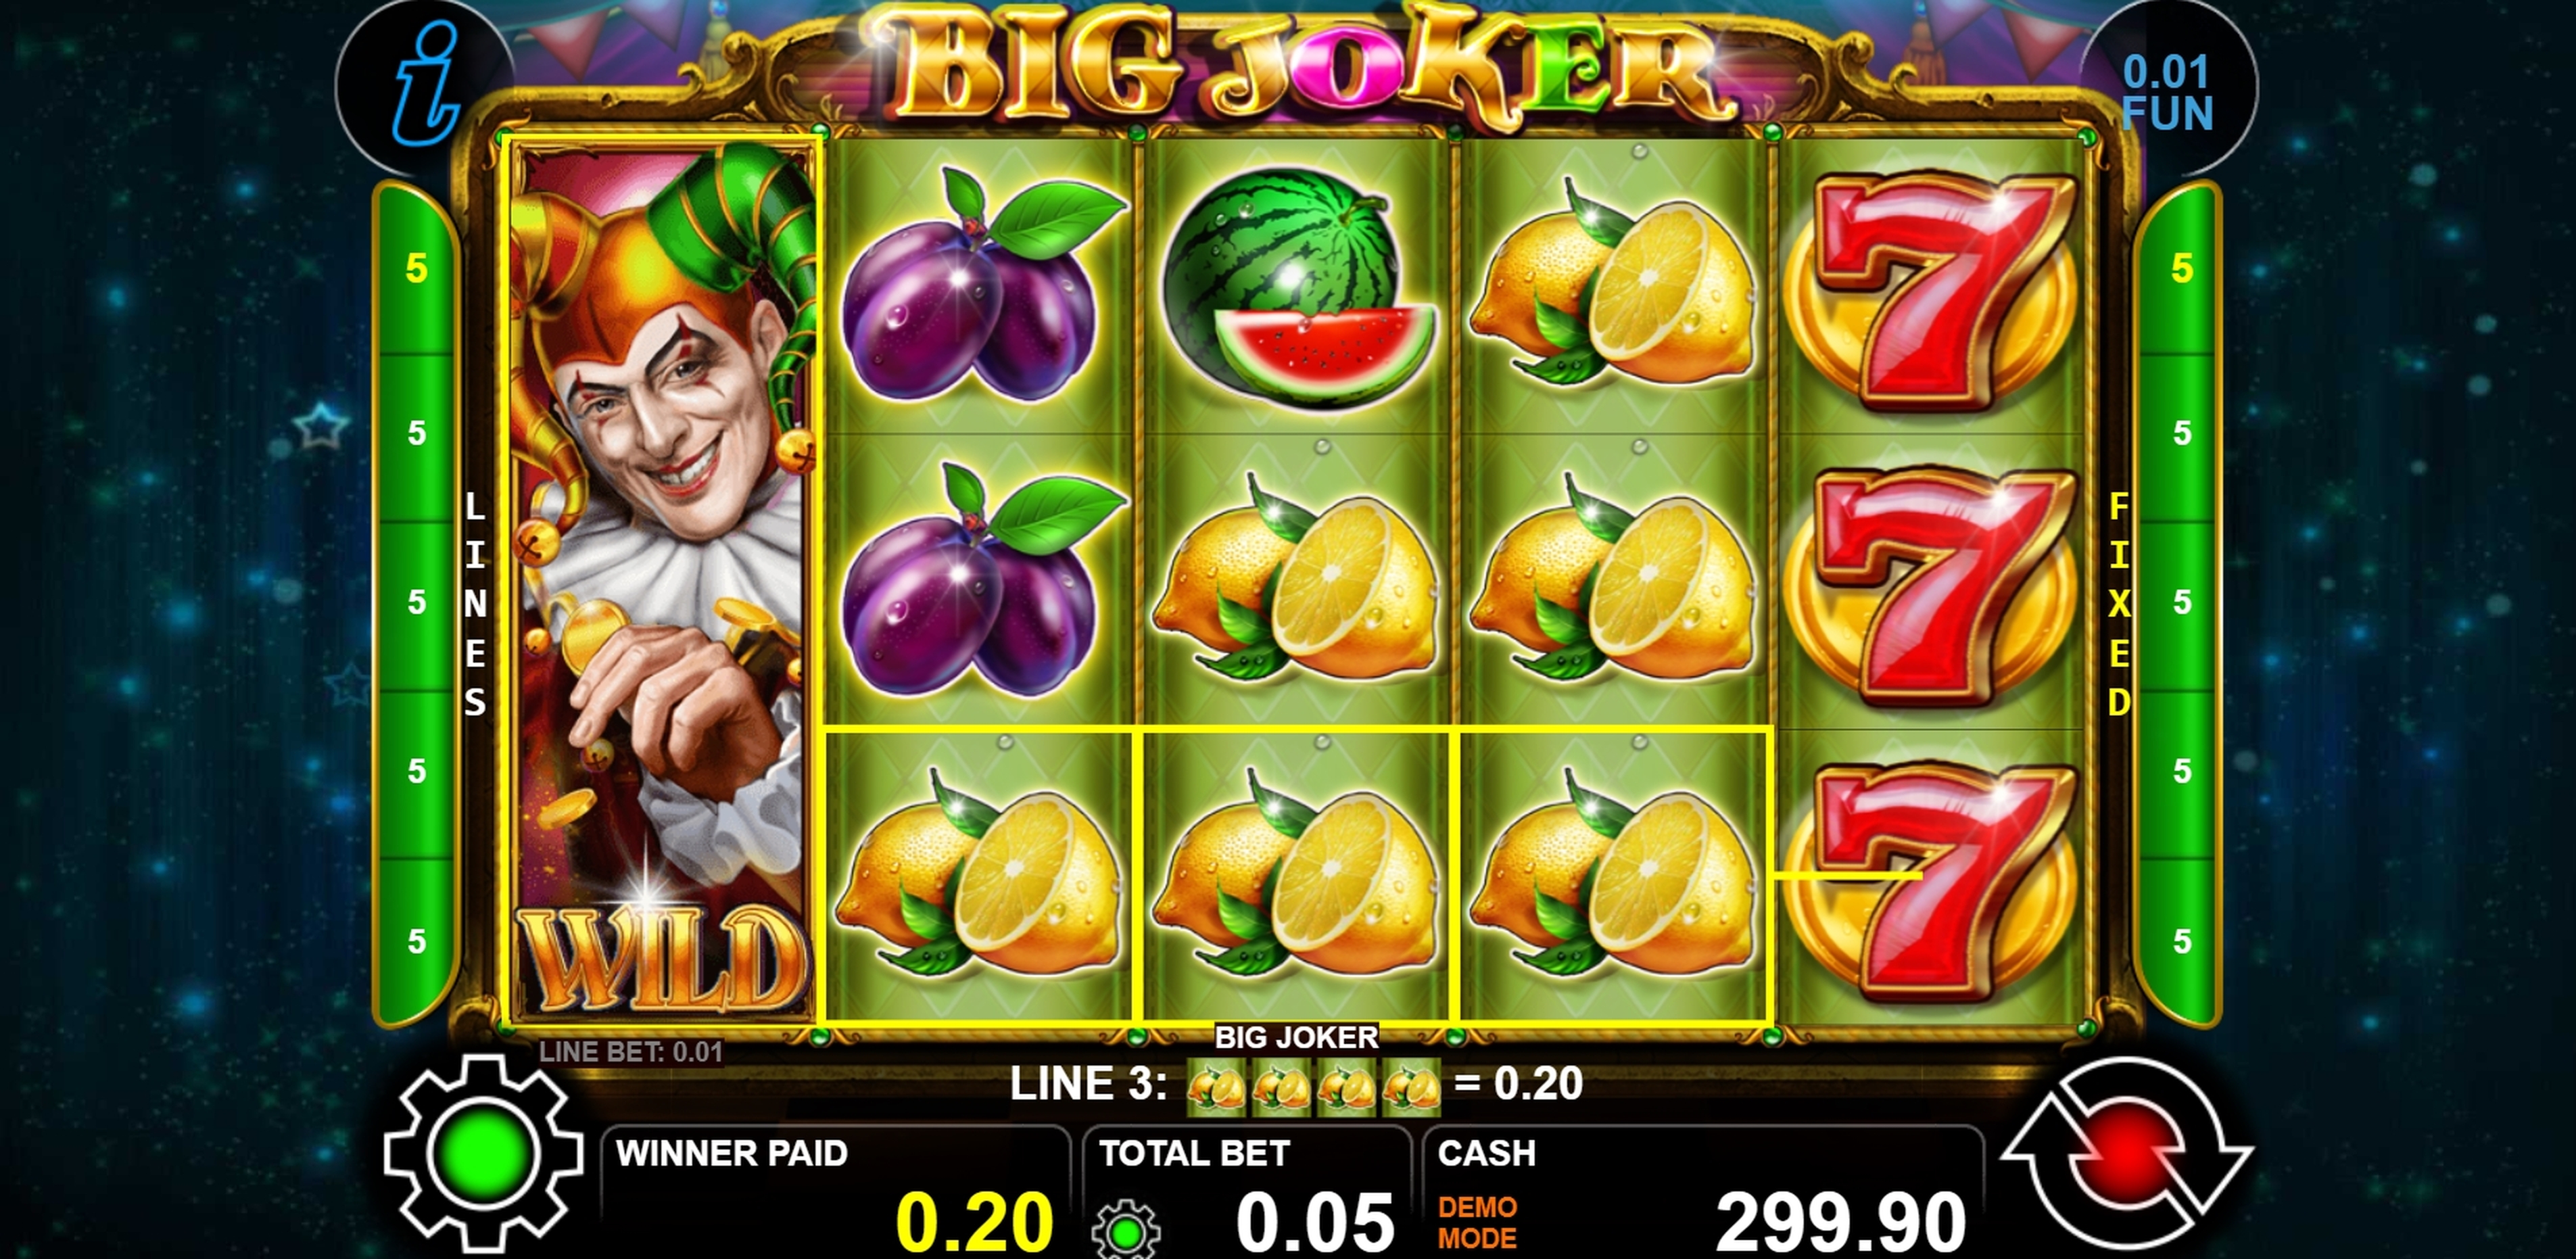 Win Money in Big Joker Free Slot Game by casino technology